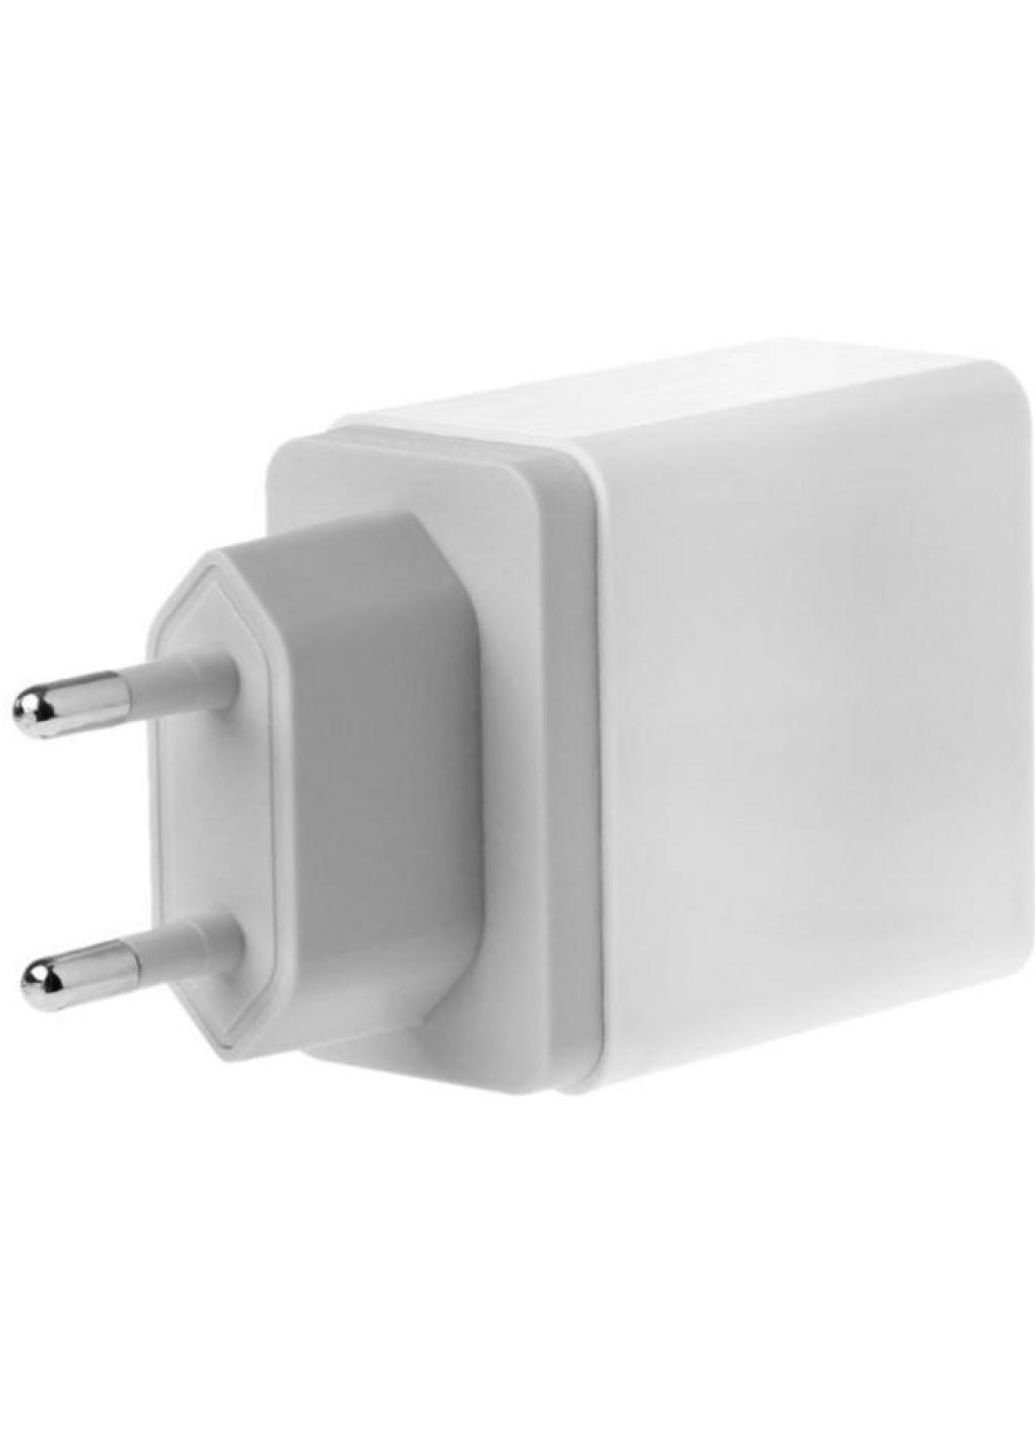 Зарядное устройство (WC-310-WH) XoKo wc-310 3a usb white (wc-310-wh) (253507346)